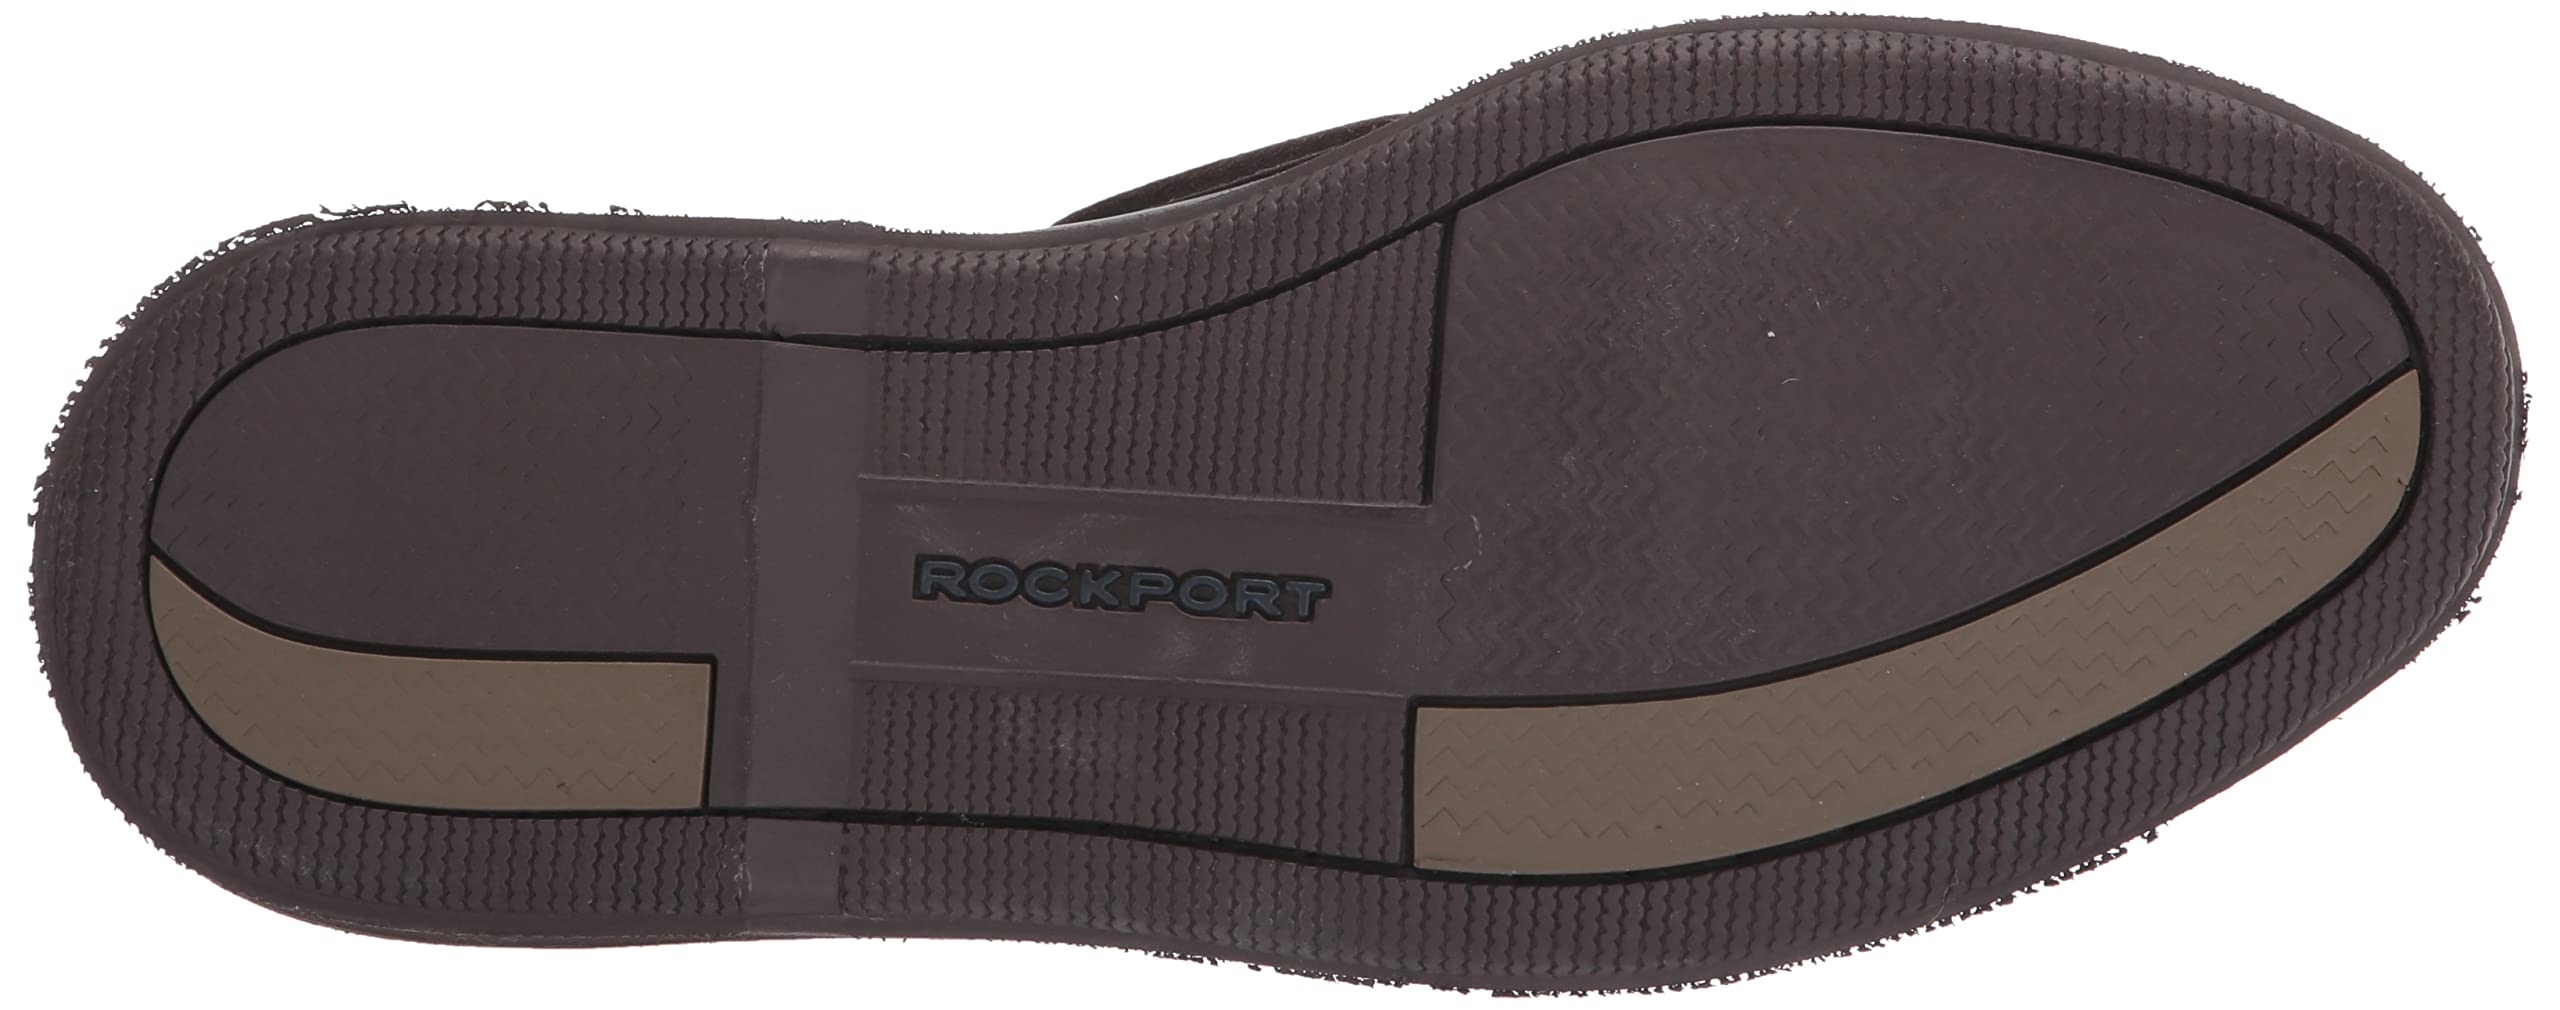 Rockport Men's Perth Boat Shoe, Dark Brown Pull Up, 9 X-Wide